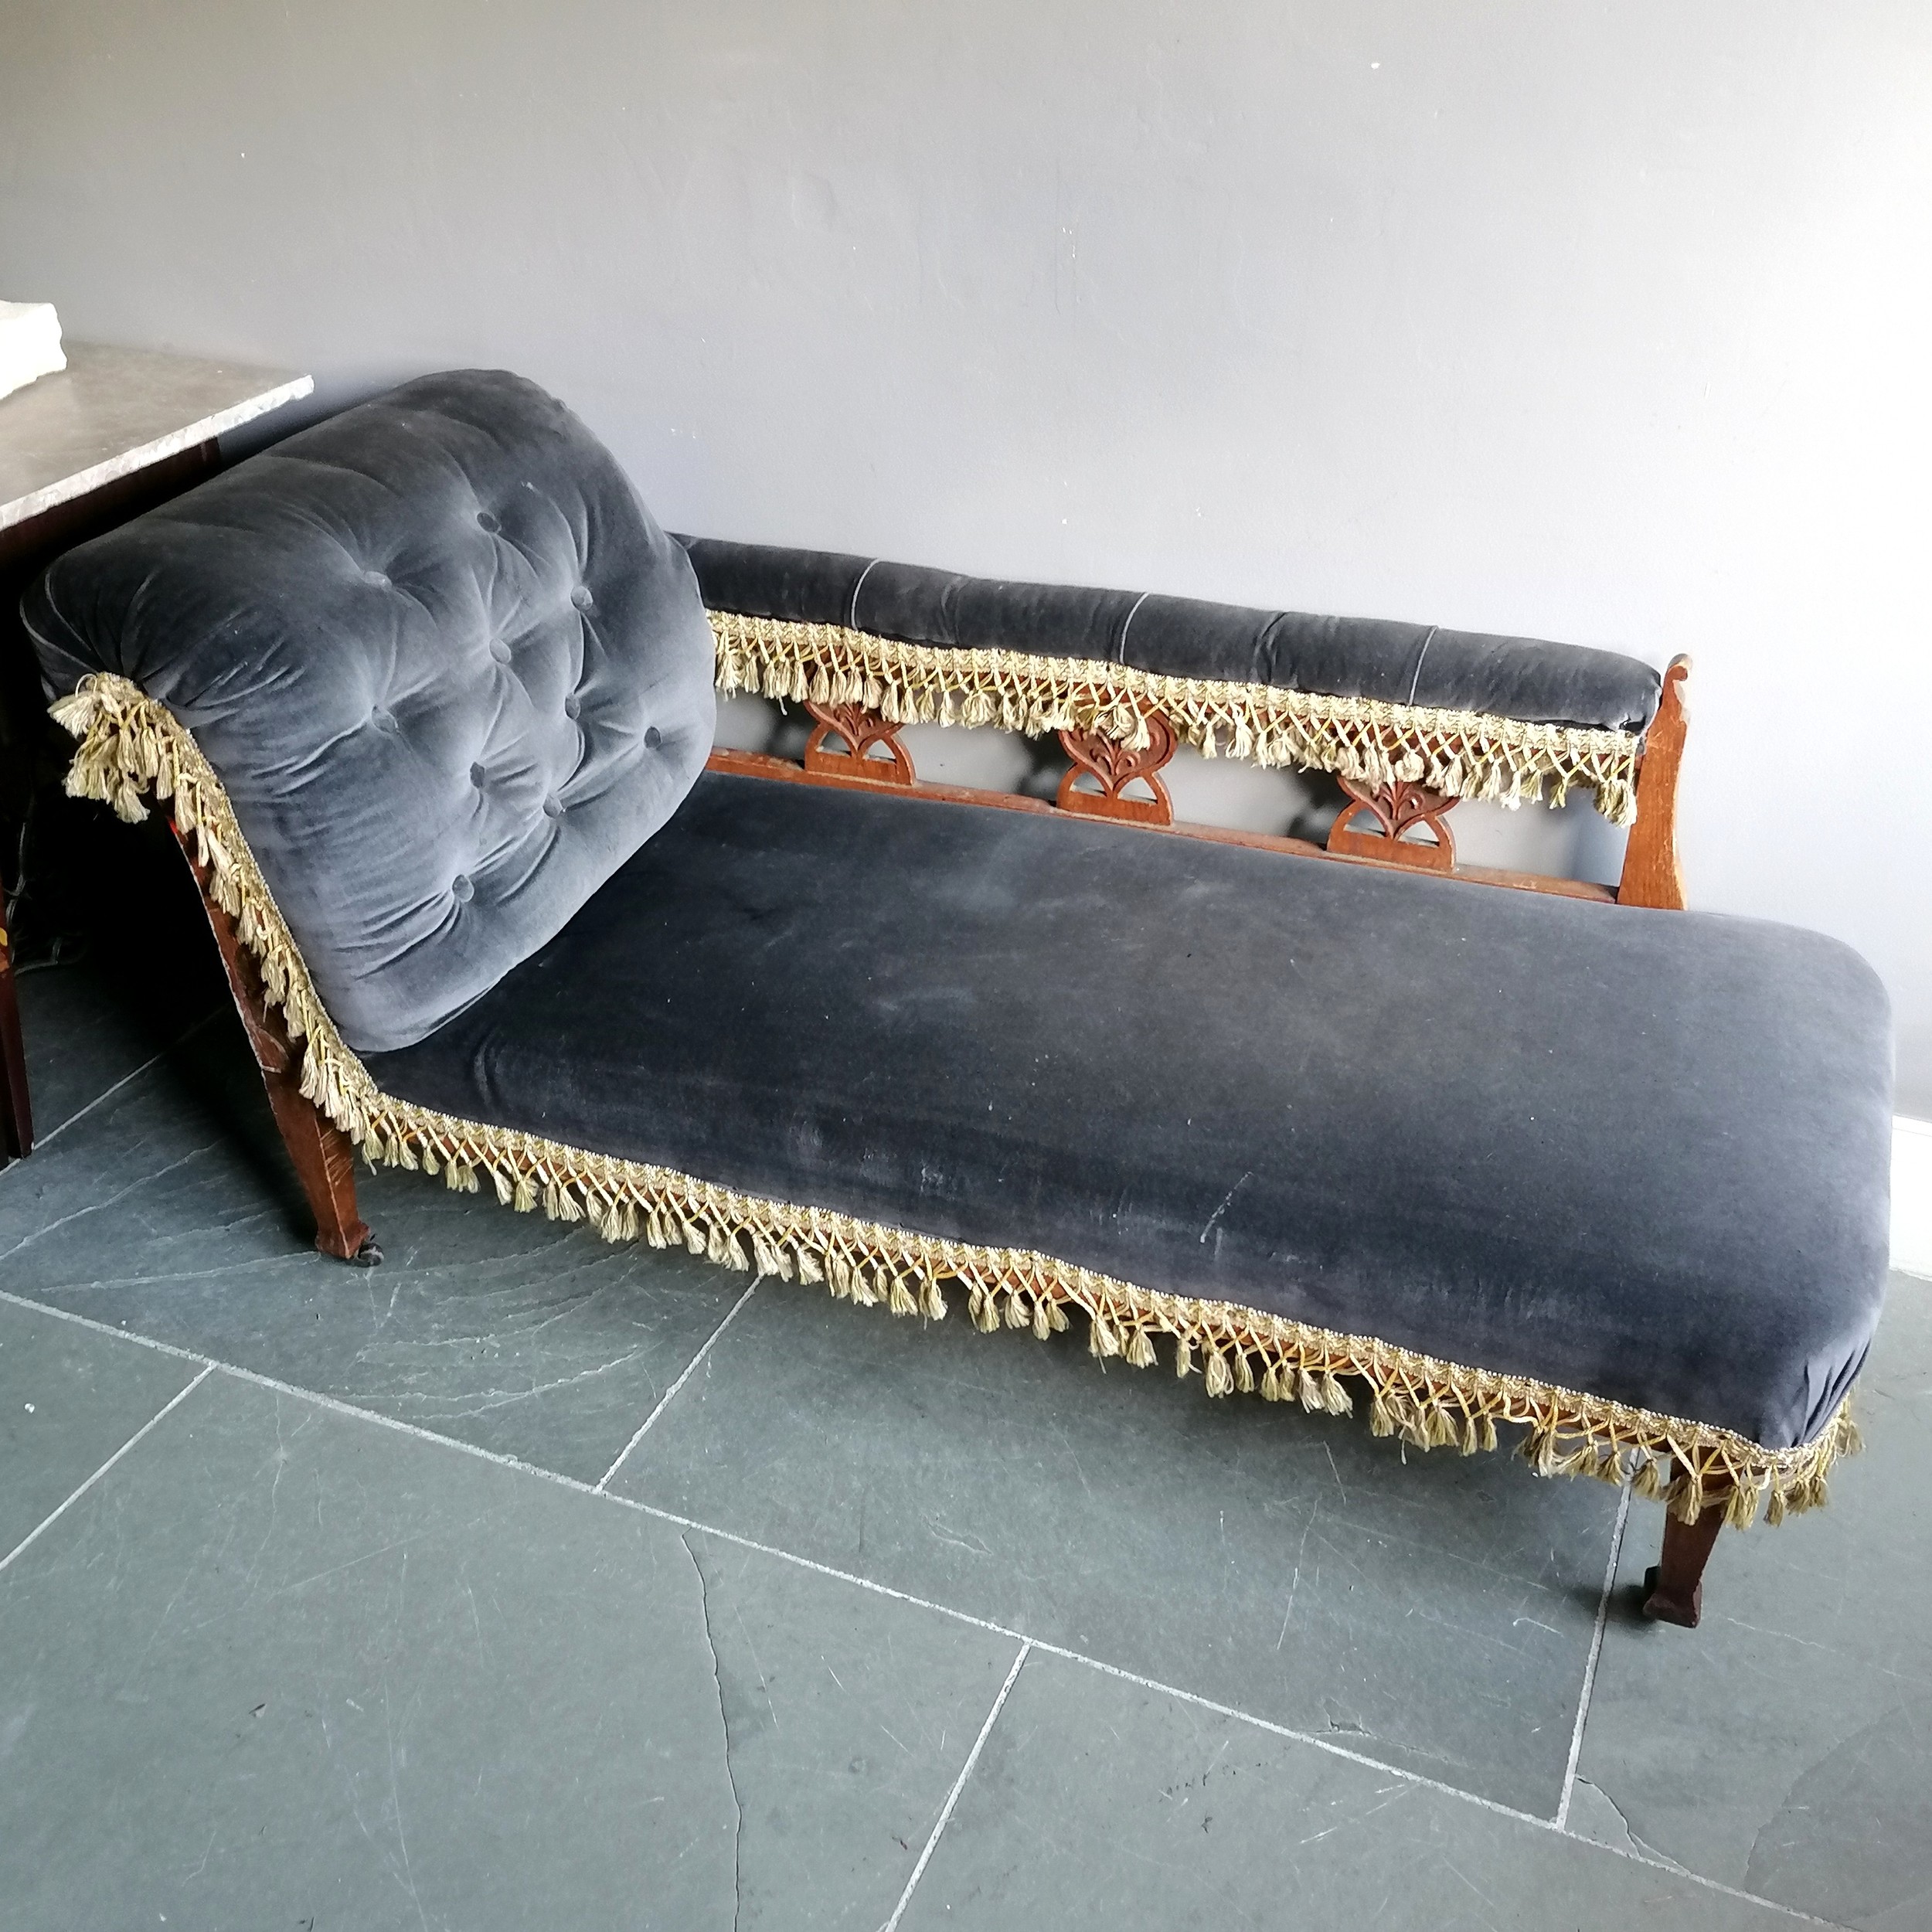 Antique oak framed chaise longue upholstered in grey 84cm high x 170cm long x 67cm deep - Bild 2 aus 3